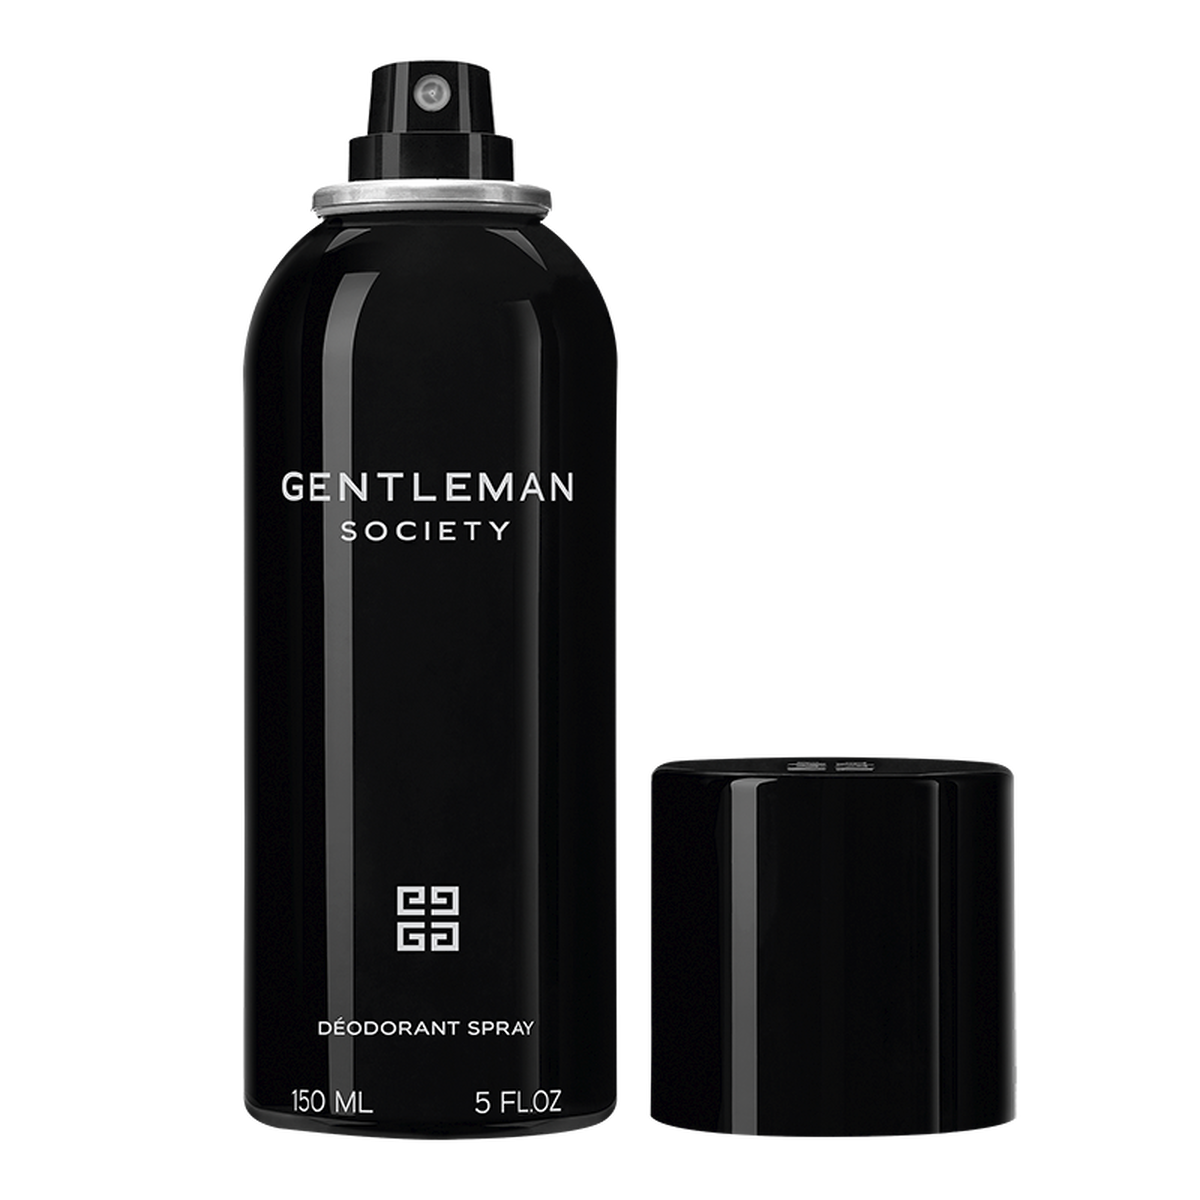 Givenchy society. Givenchy Gentleman дезодорант. Givenchy Gentleman Deodorant Spray. Мужской парфюмированный дезодорант живанши. Givenchy Gentleman Society.